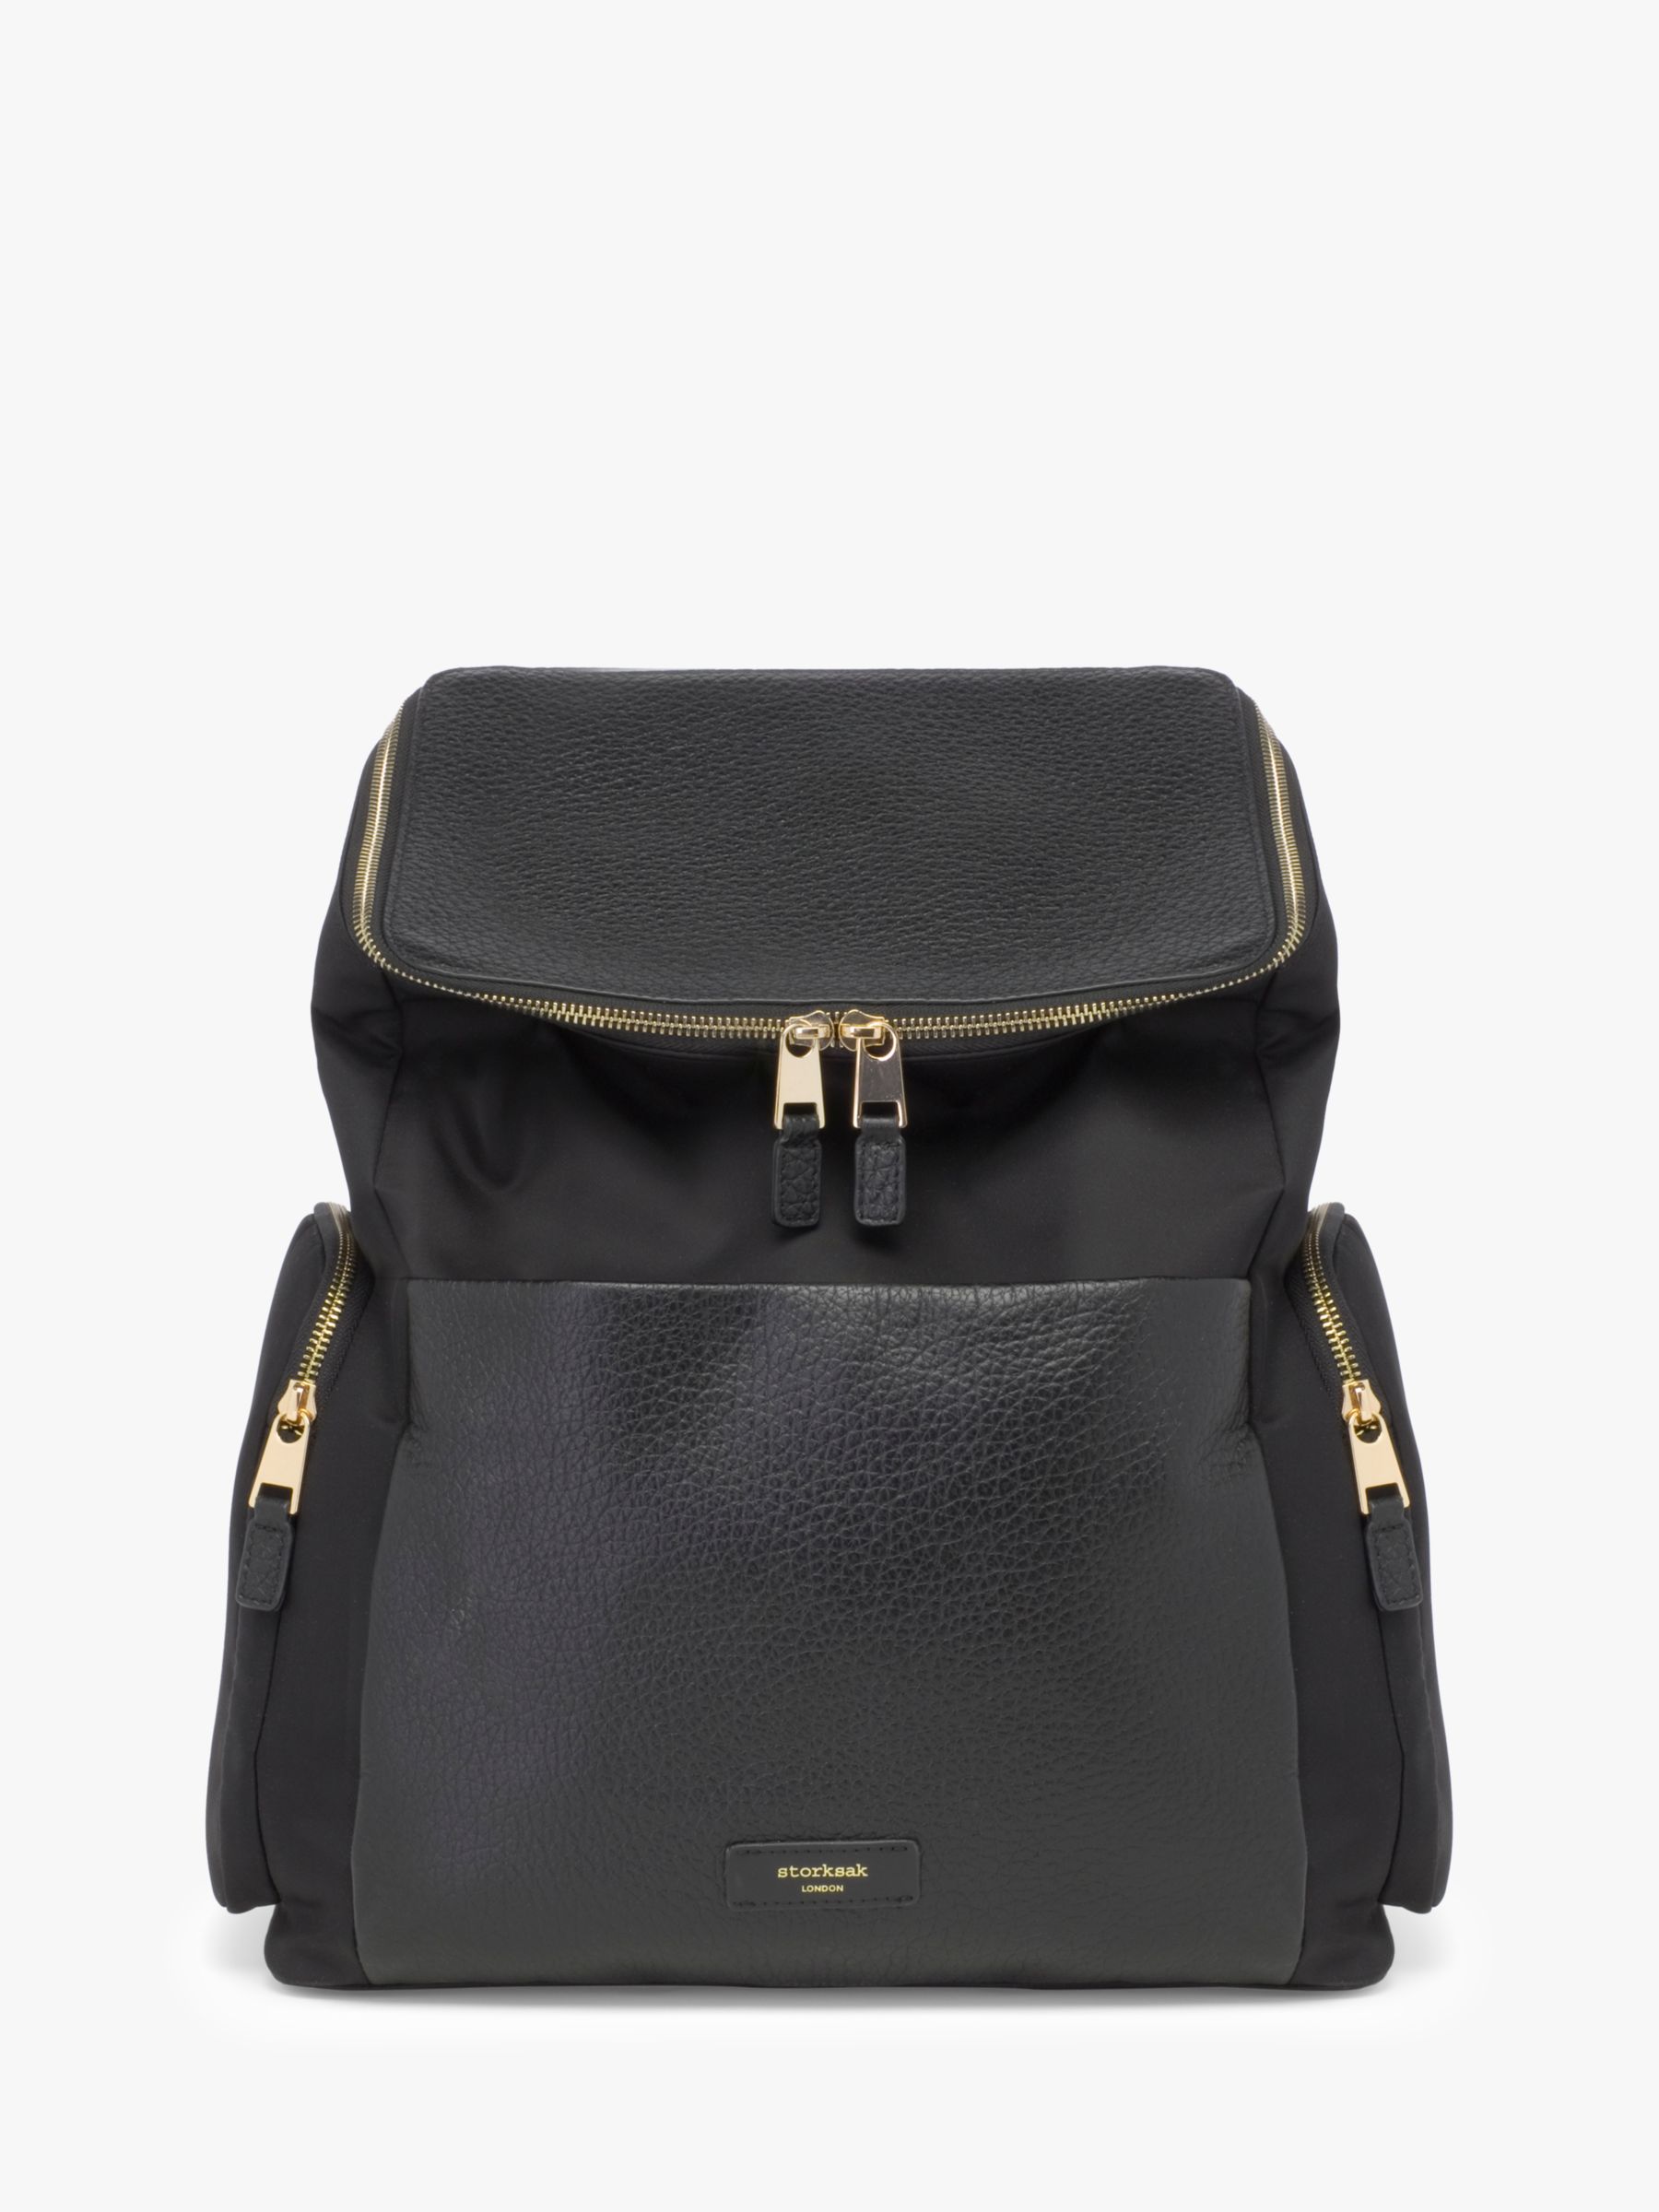 Storksak Alyssa Convertible Backpack Changing Bag, Black